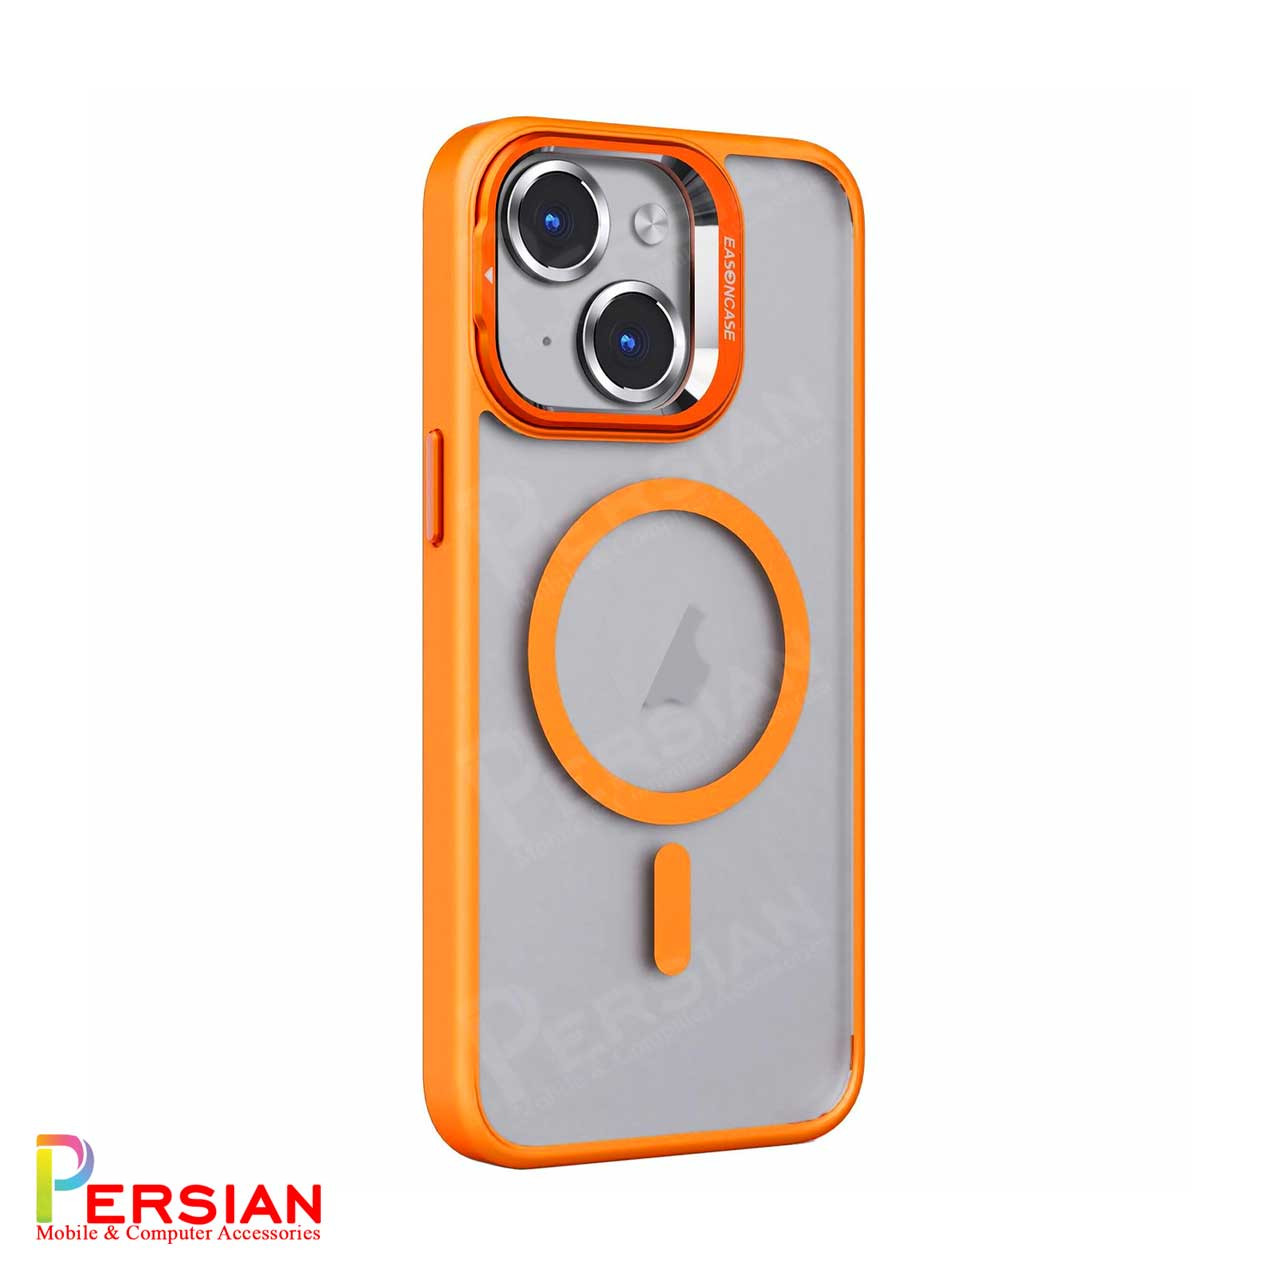 قاب آیفون 13 پر شفاف استند شو ایسون کیس با مگ سیف و محافظ لنز رینگی Eason Case IPhone 13 Pro